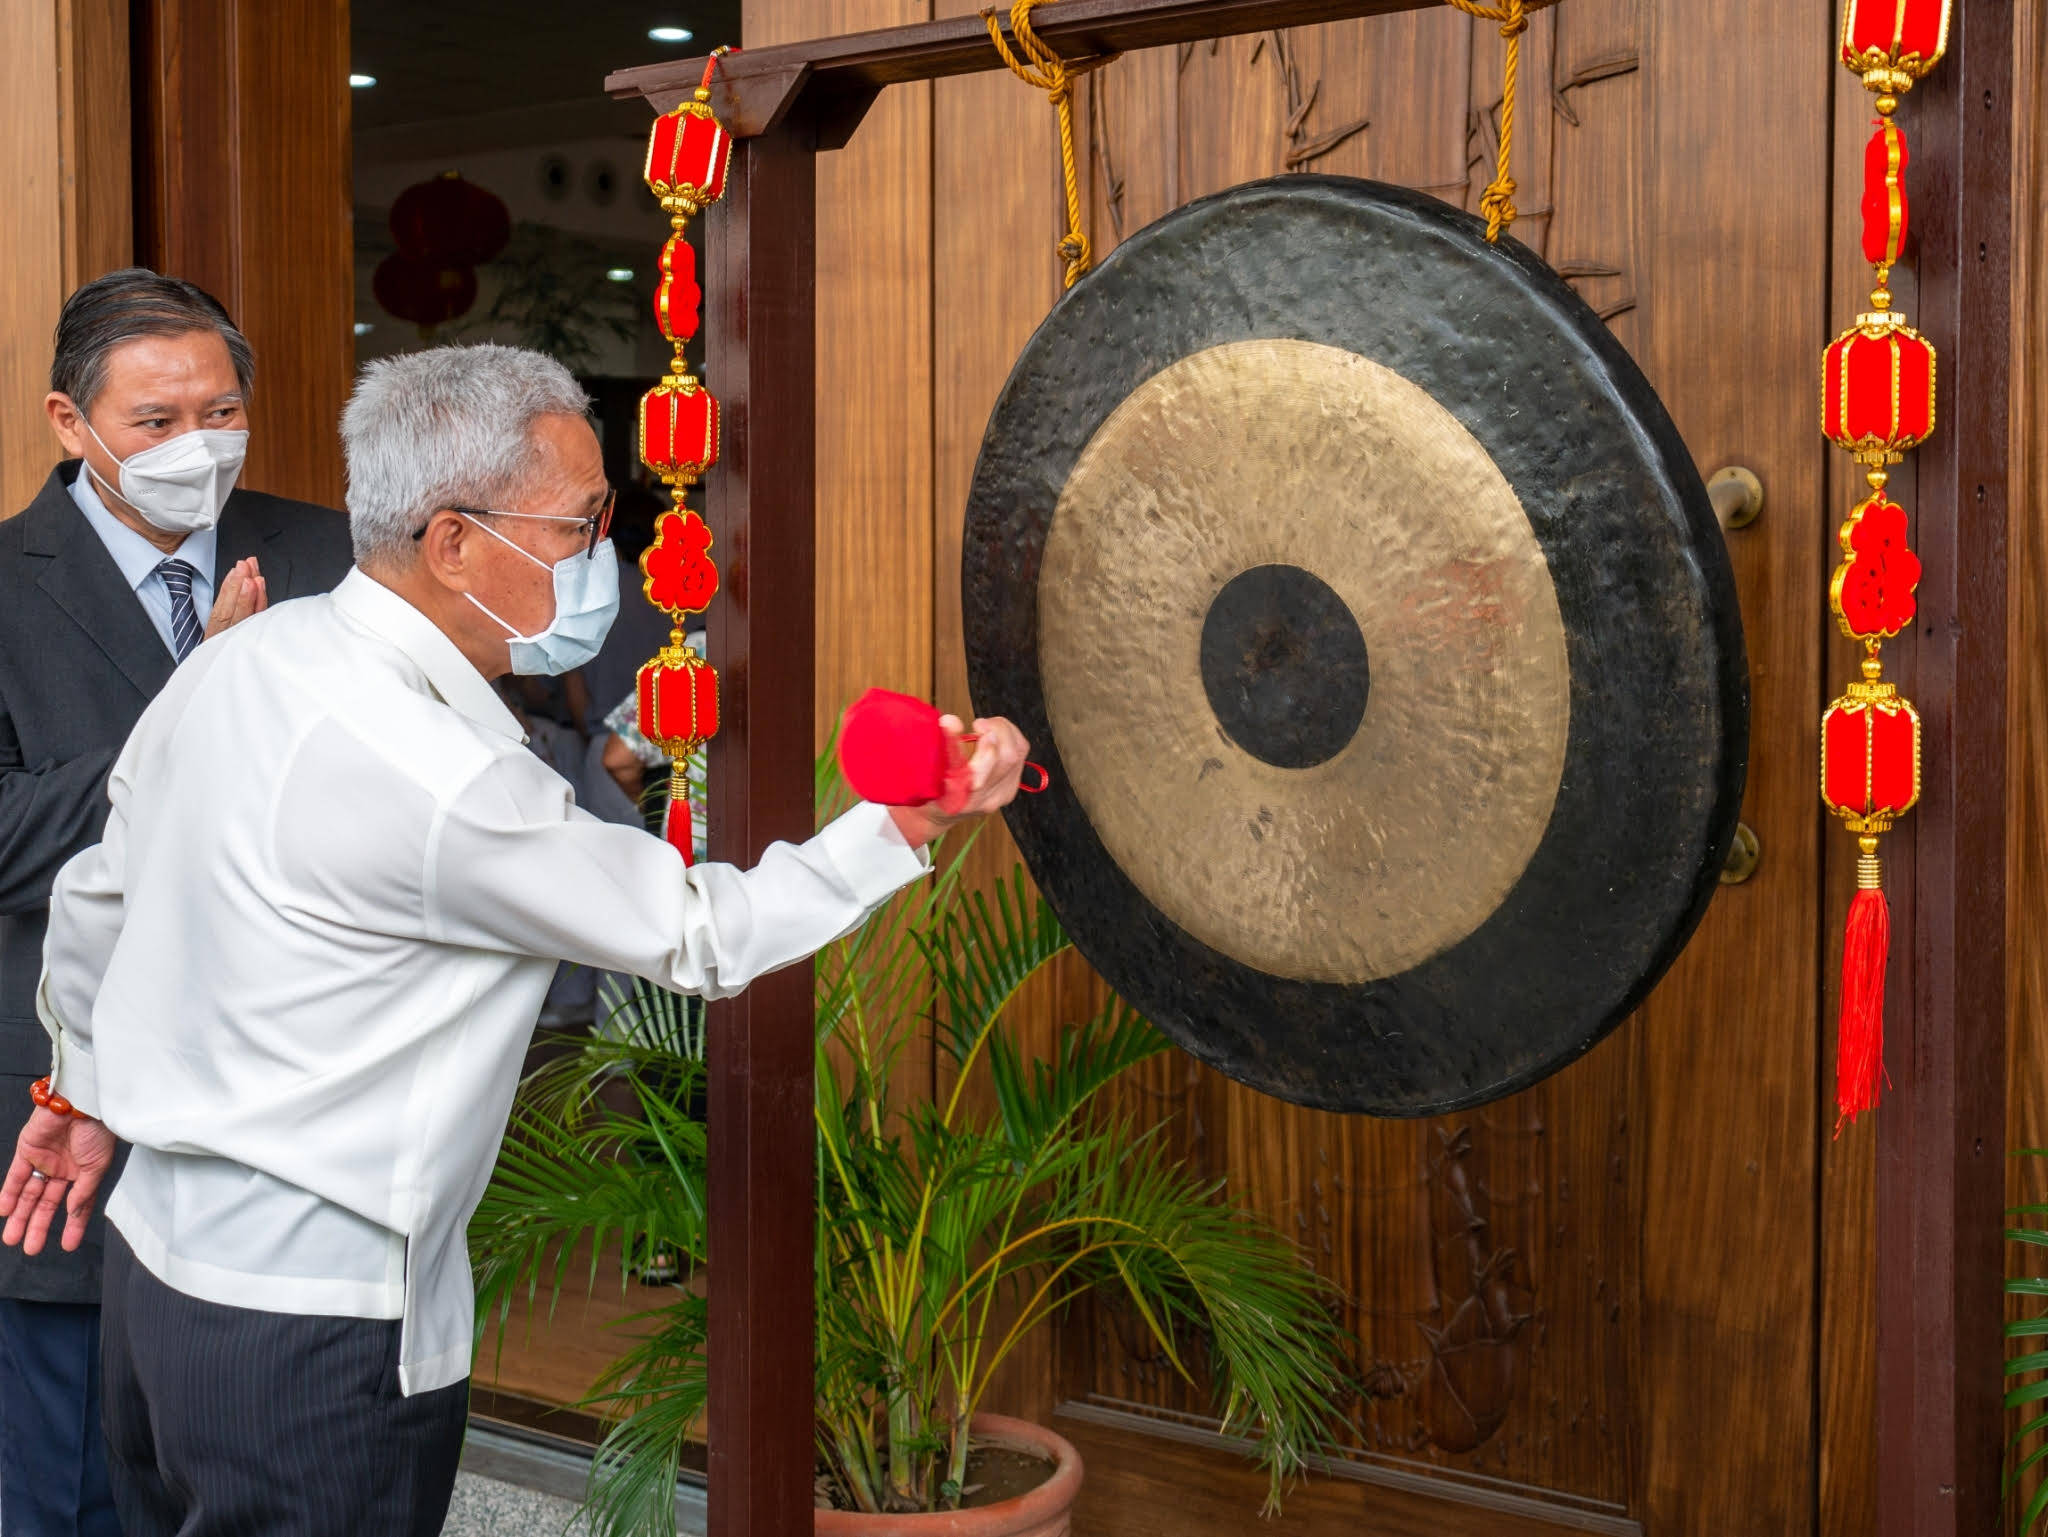 Taiwan Ambassador Michael Peiyung Hsu strikes the gong for good luck outside the JingSi Hall. 【Photo by Daniel Lazar】